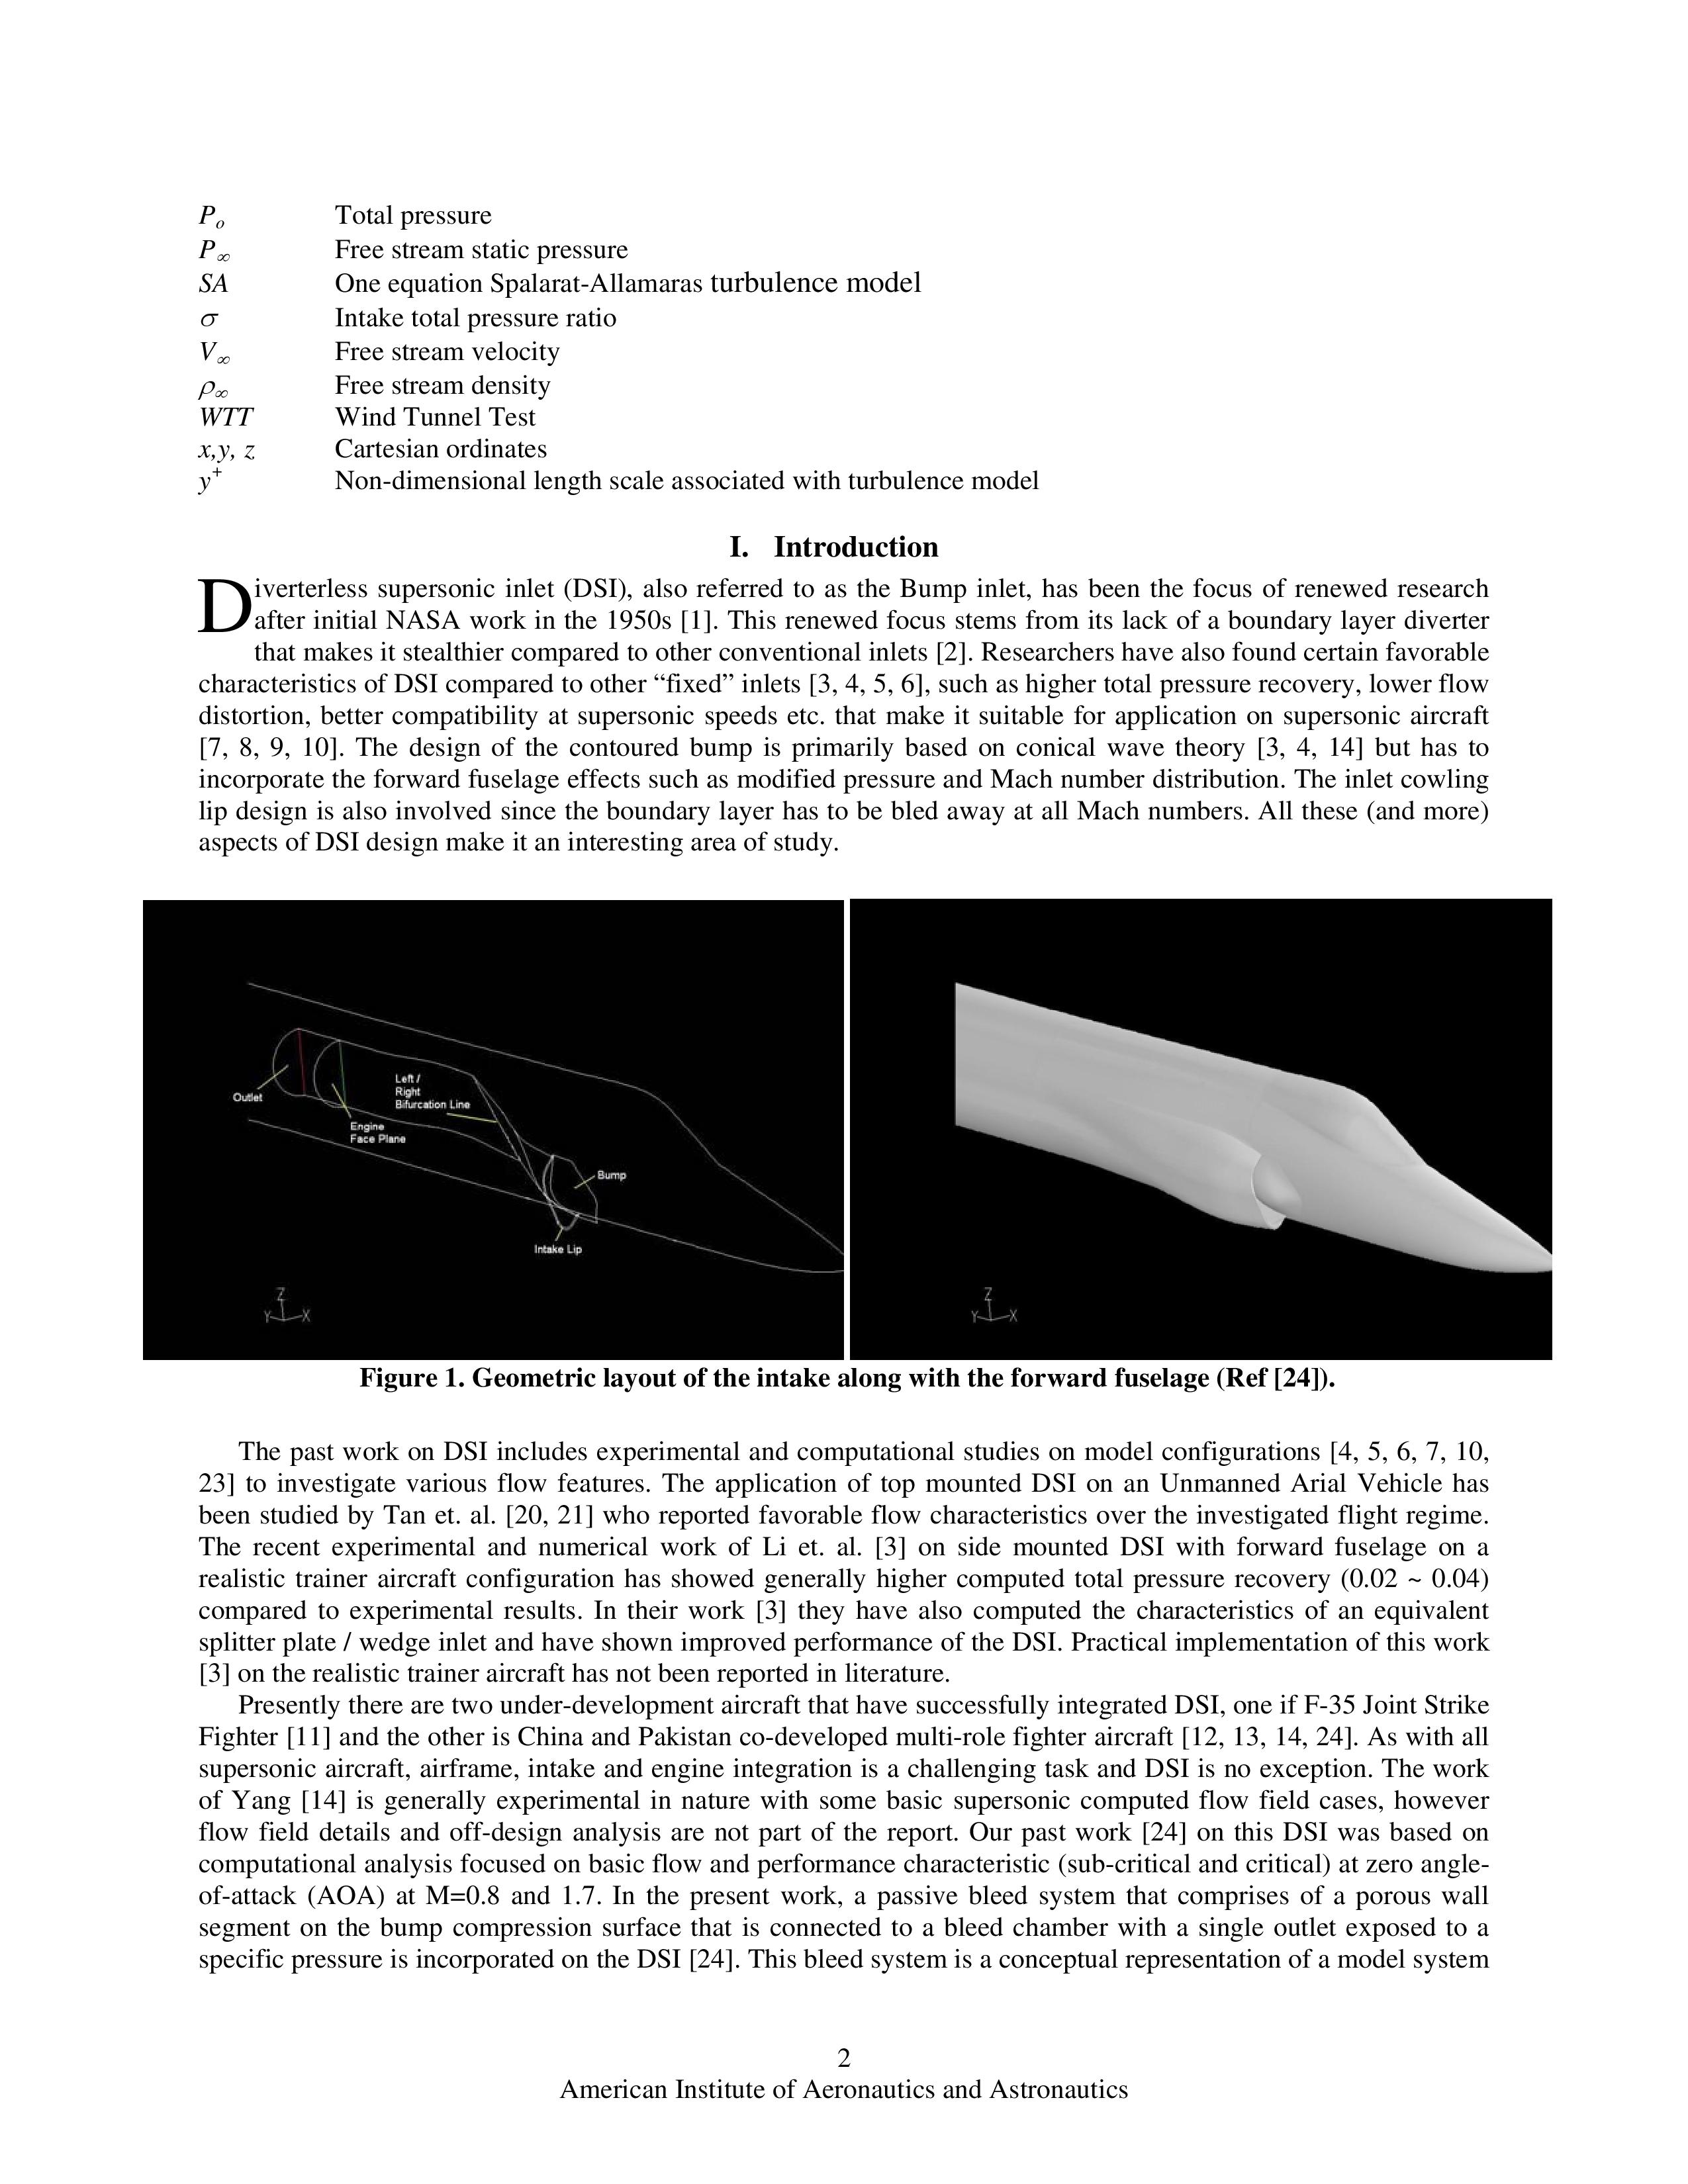 AIAA-2011-920-page-002.jpg